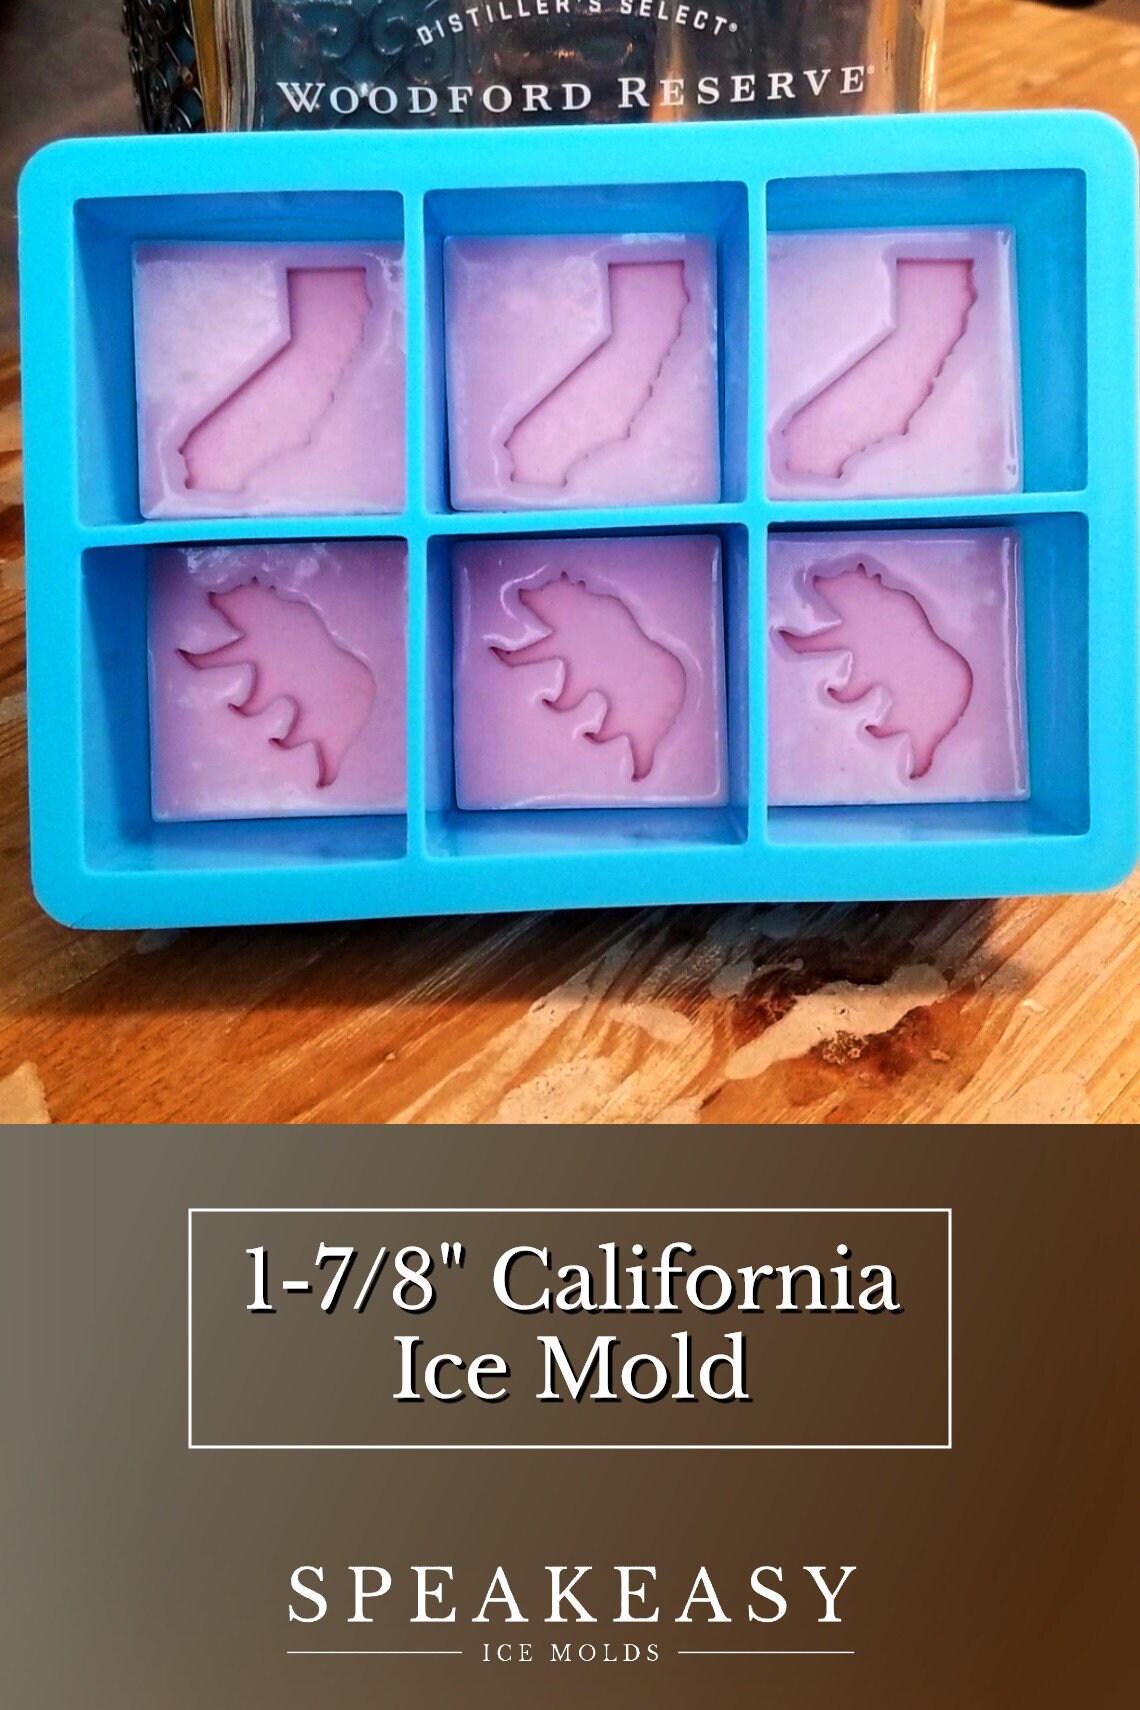 California themed whiskey ice mold, 1-7/8 inch cubes, California